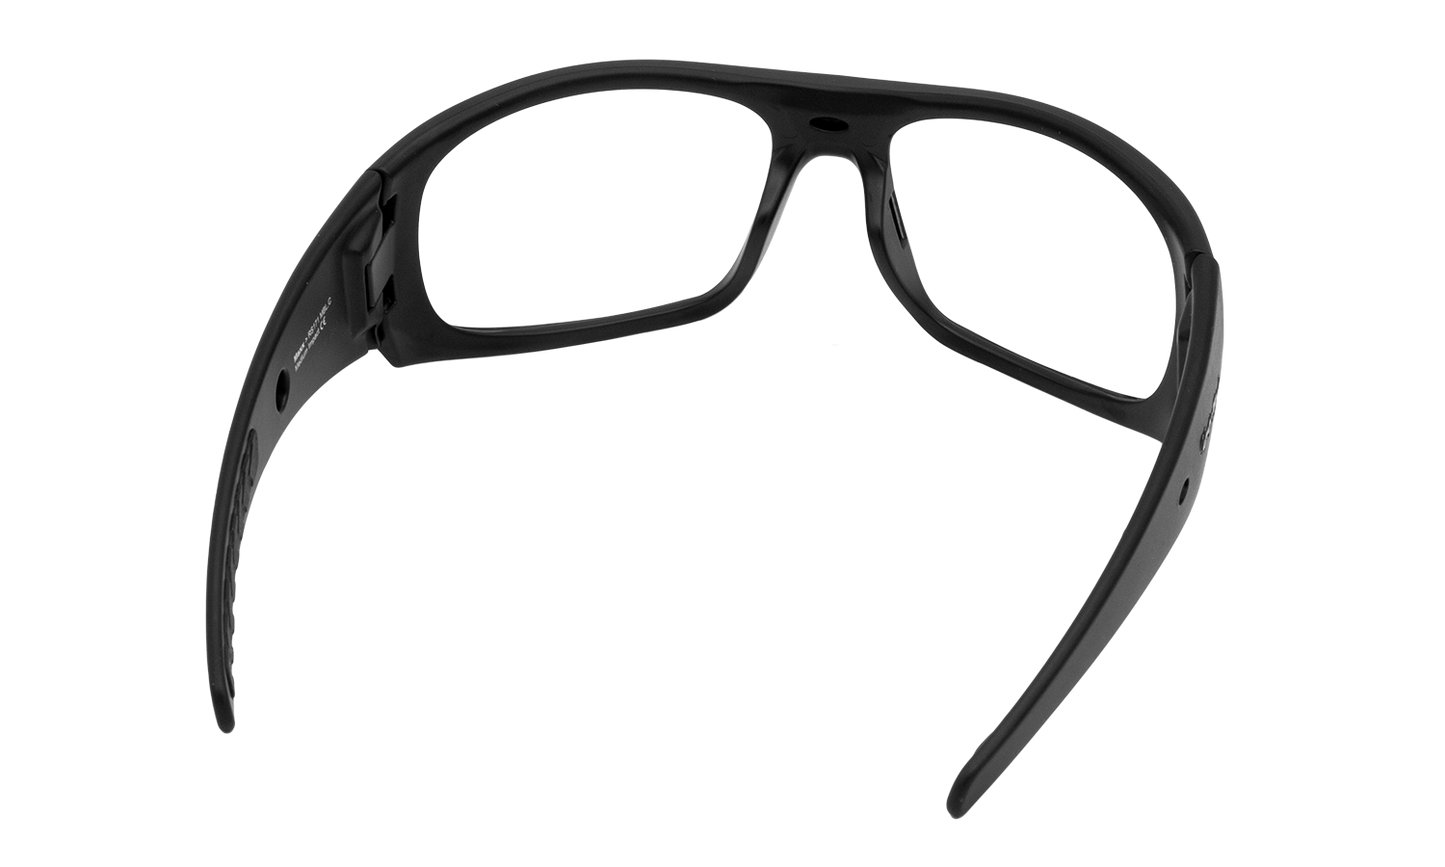 Maxx Motorcycle Sunglasses RS171